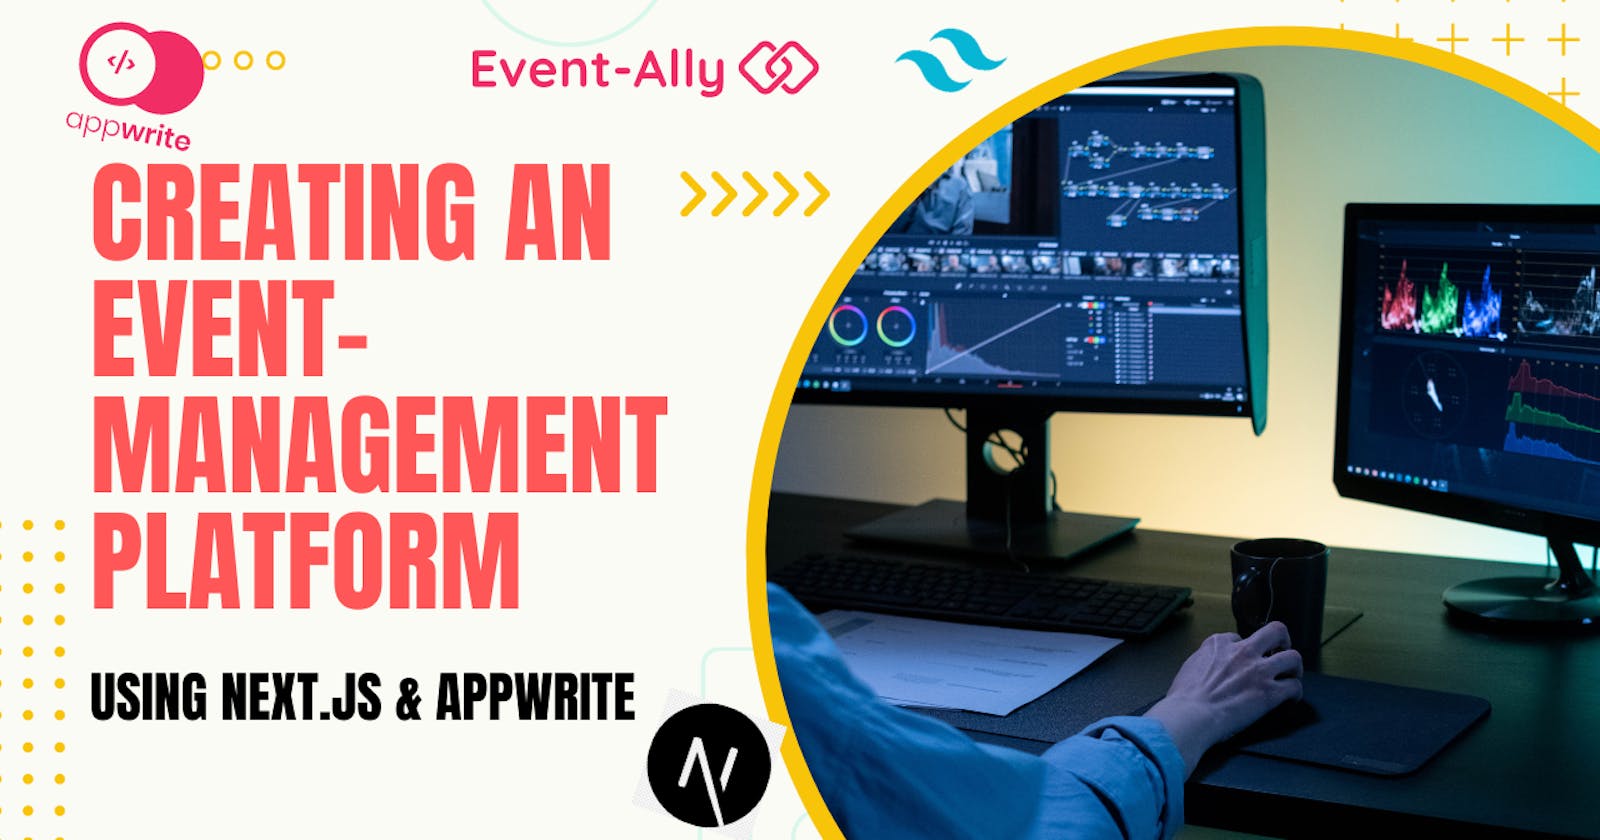 Event-Ally: Build an Event Planning Platform using Next.js & Appwrite